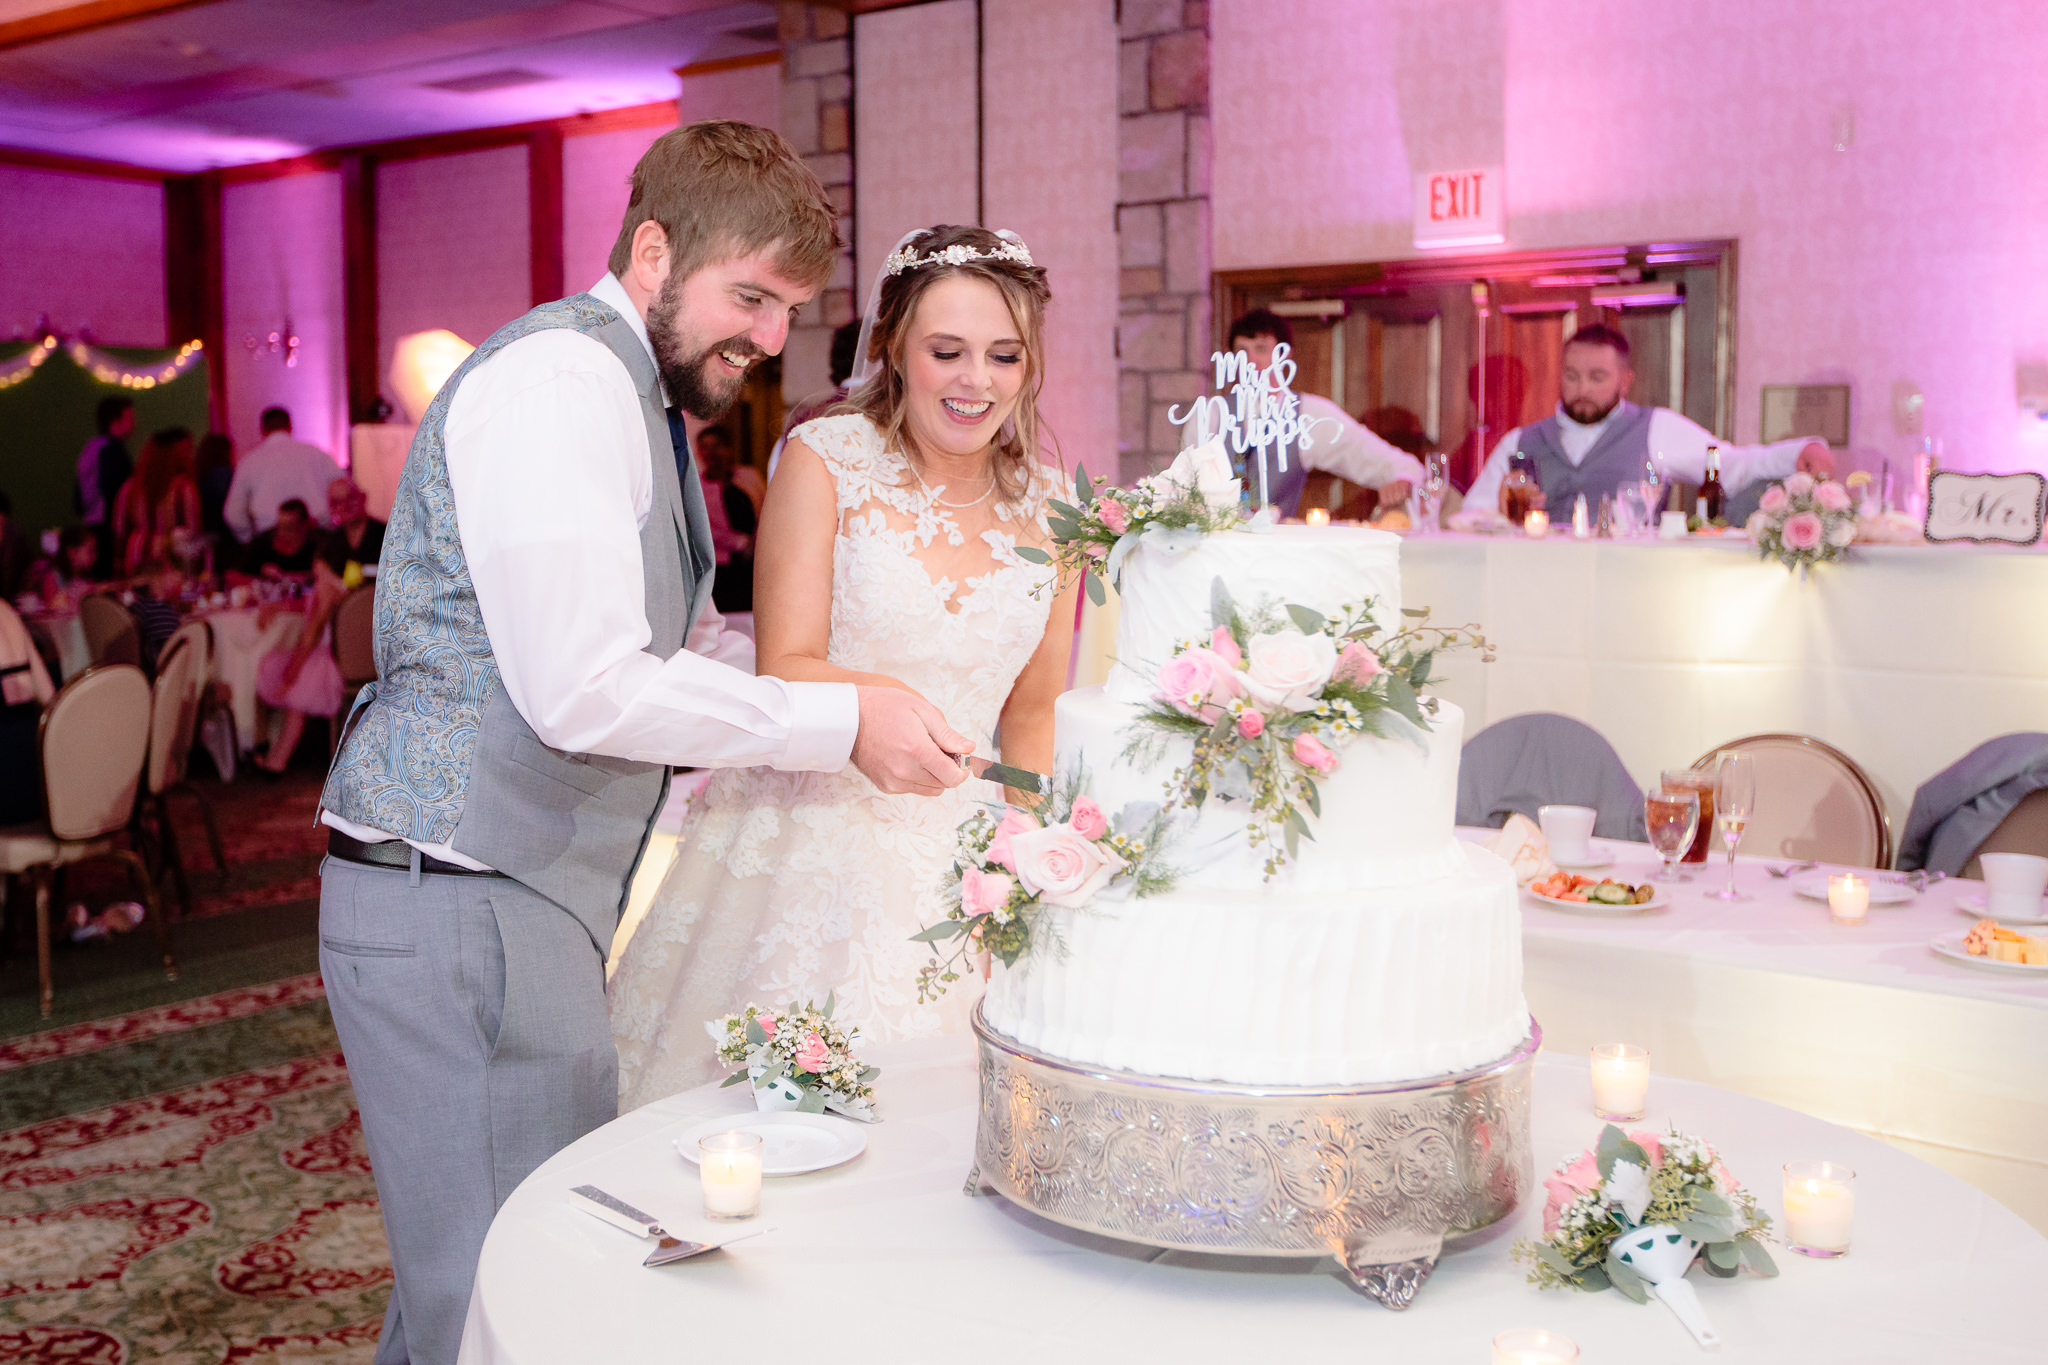 Newlyweds cut the cake at their Oglebay wedding reception